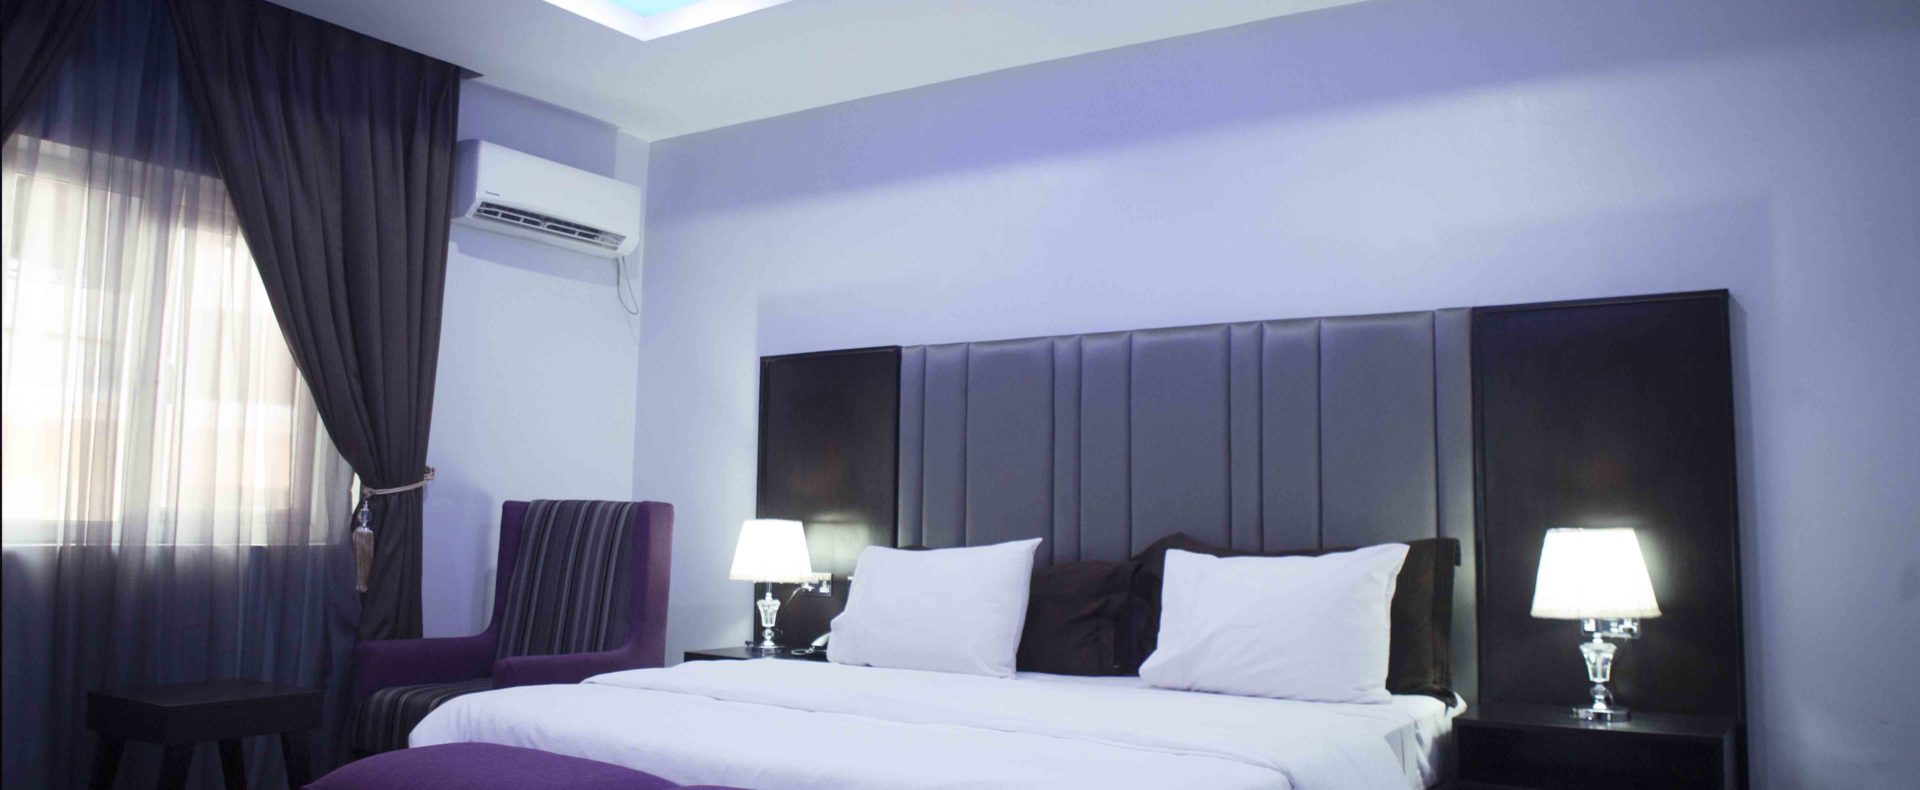 Hotel Standard Room In Lekki Phase 1 Lagos Nigeria